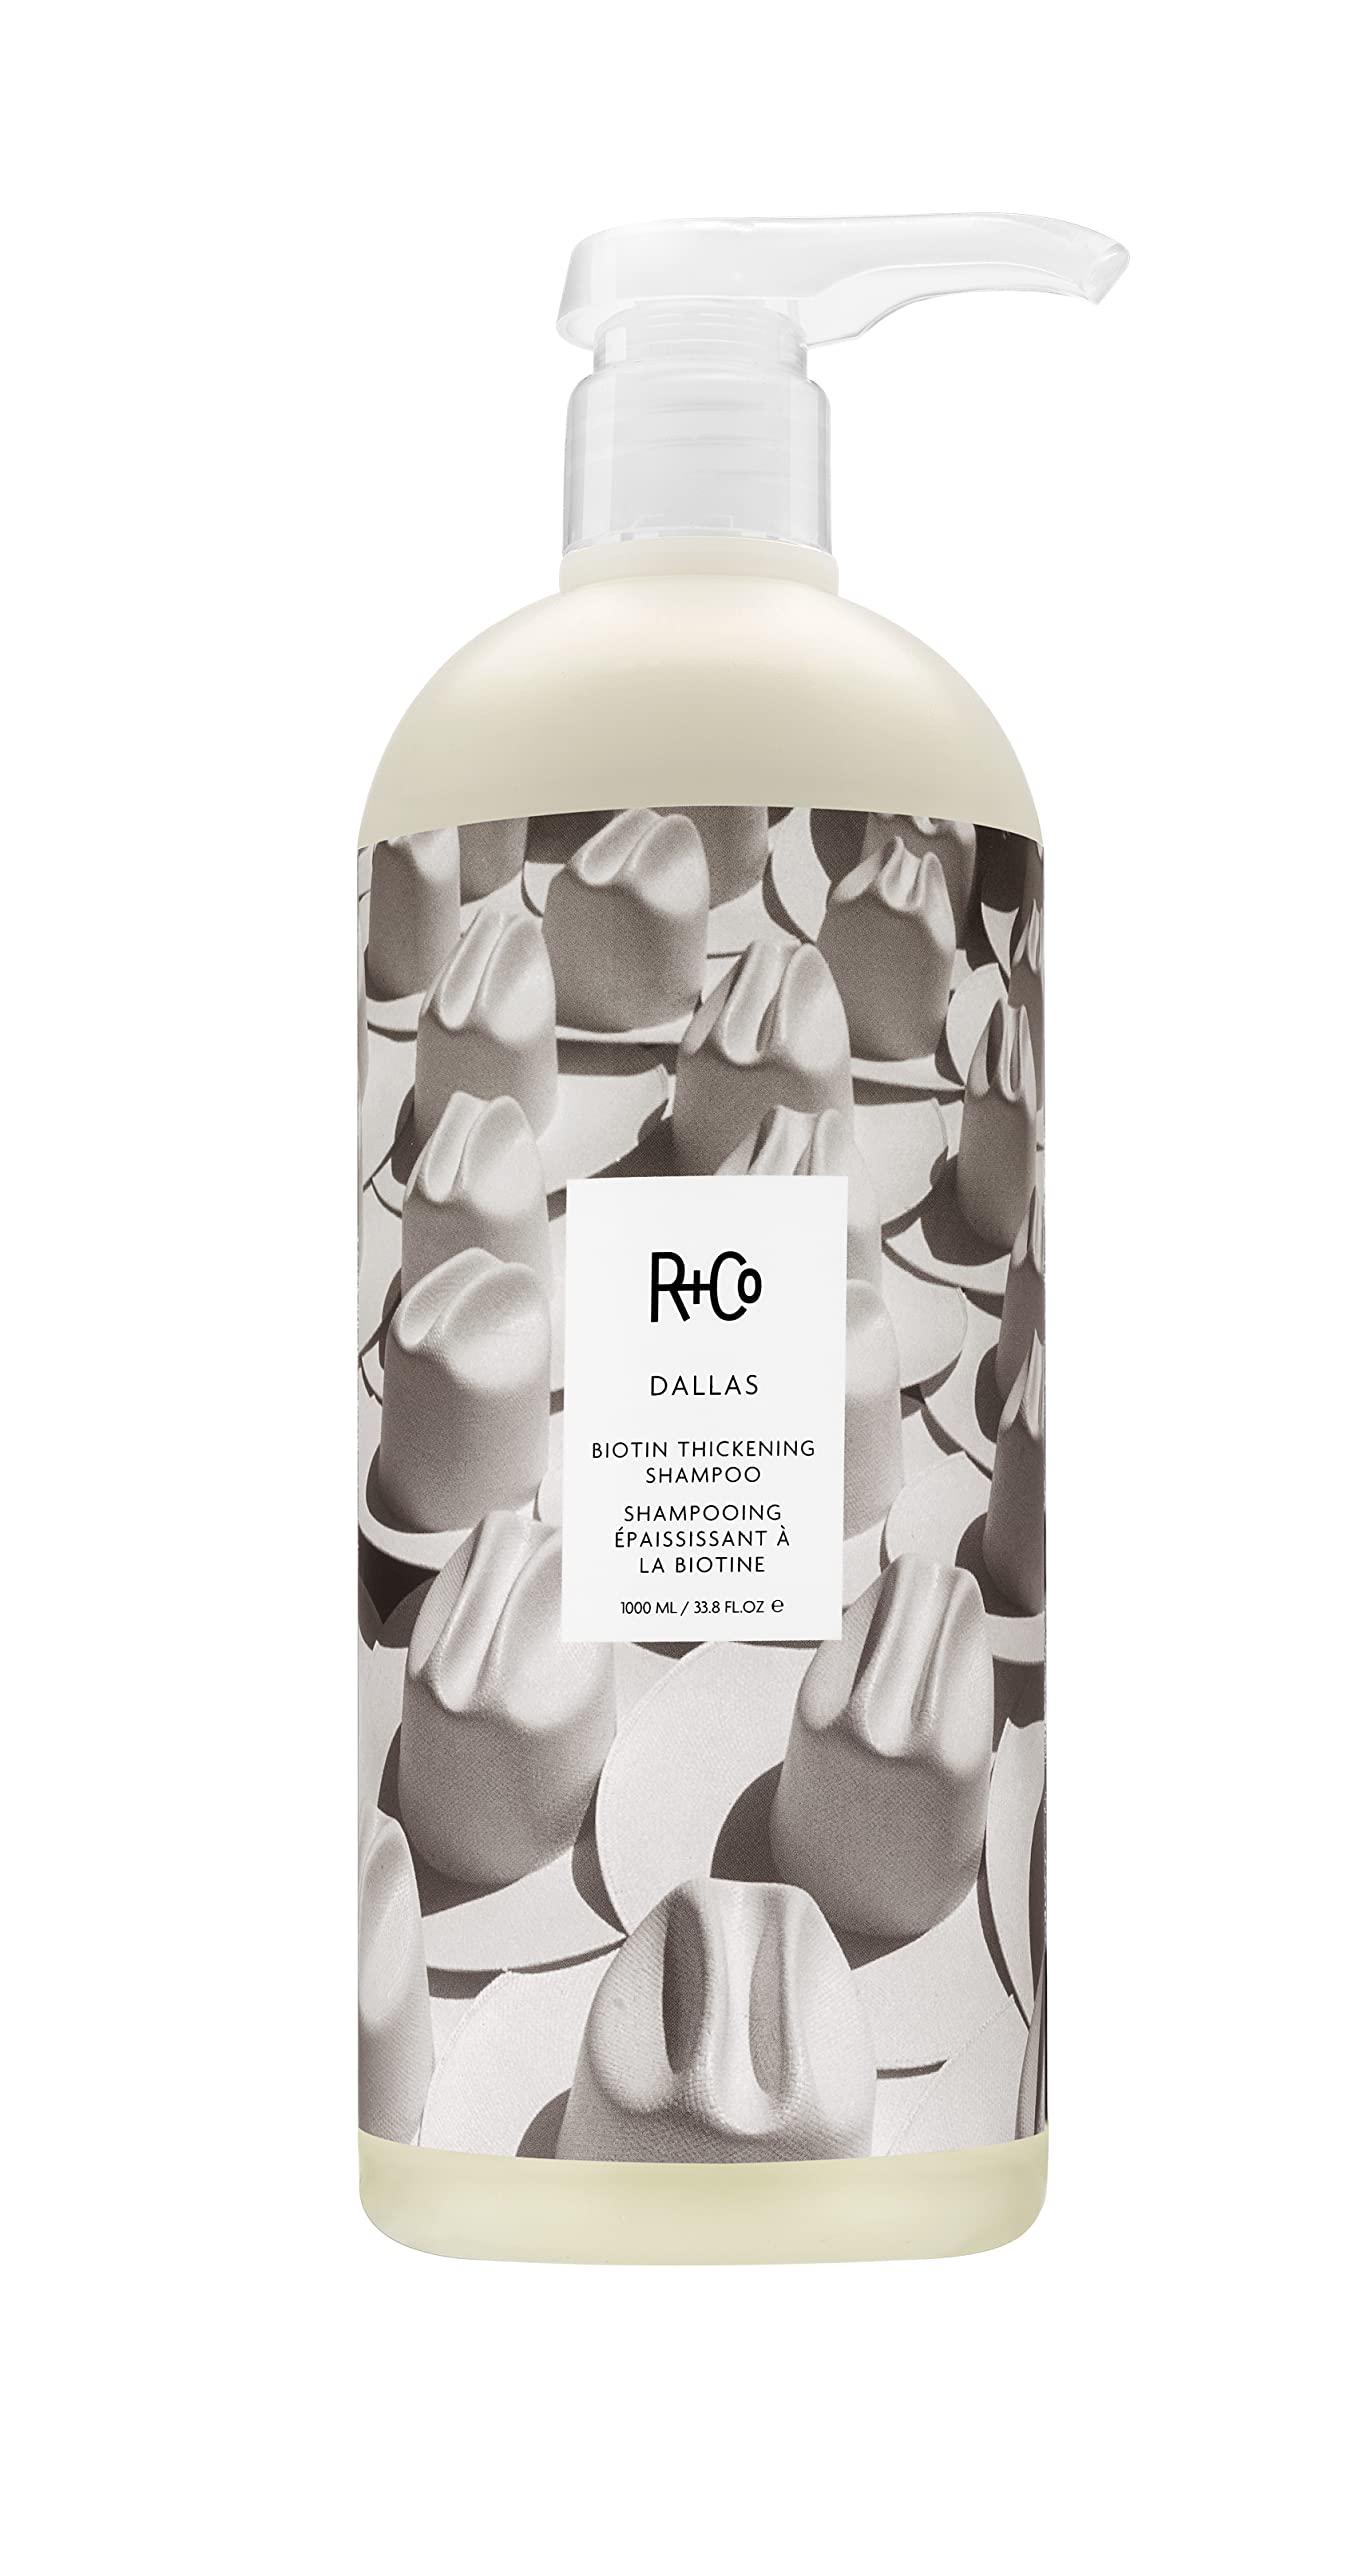 R+Co Dallas Biotin Thickening Shampoo | Thickens, Nourishes + Strengthens | Vegan + Cruelty-Free | 33.8 Oz